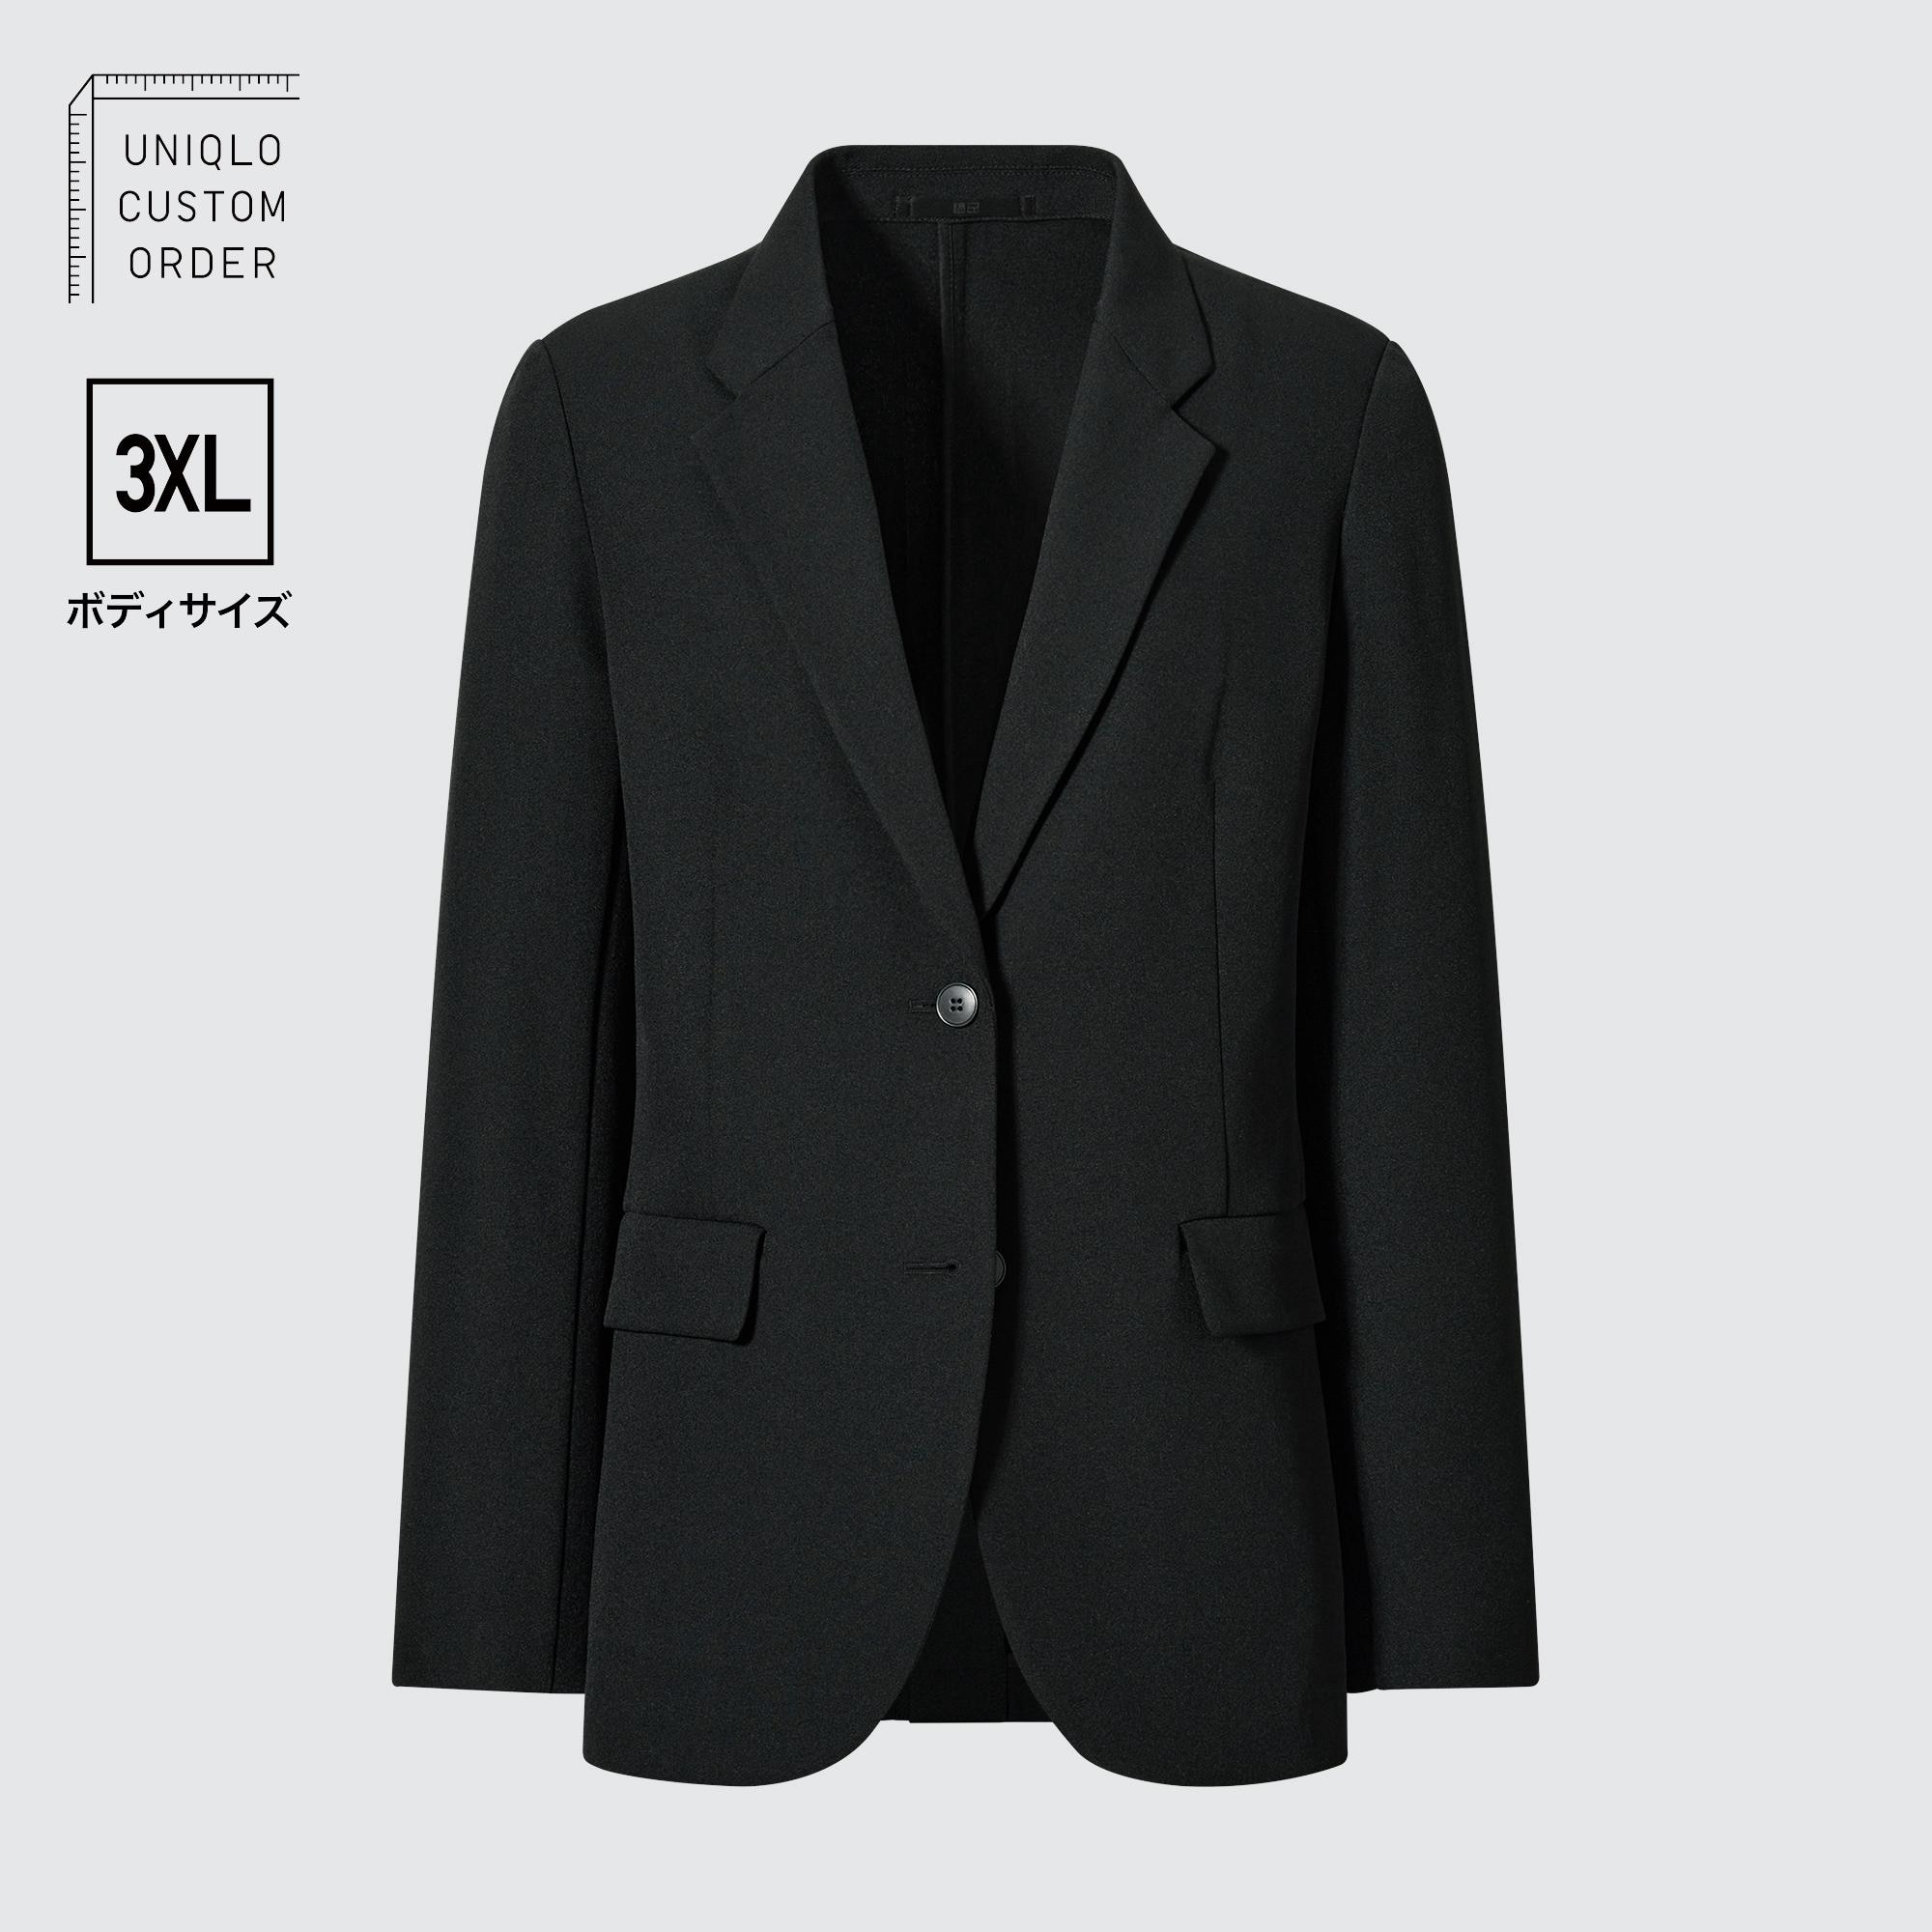 Куртка UNIQLO Кандо 3XL, черный цена и фото